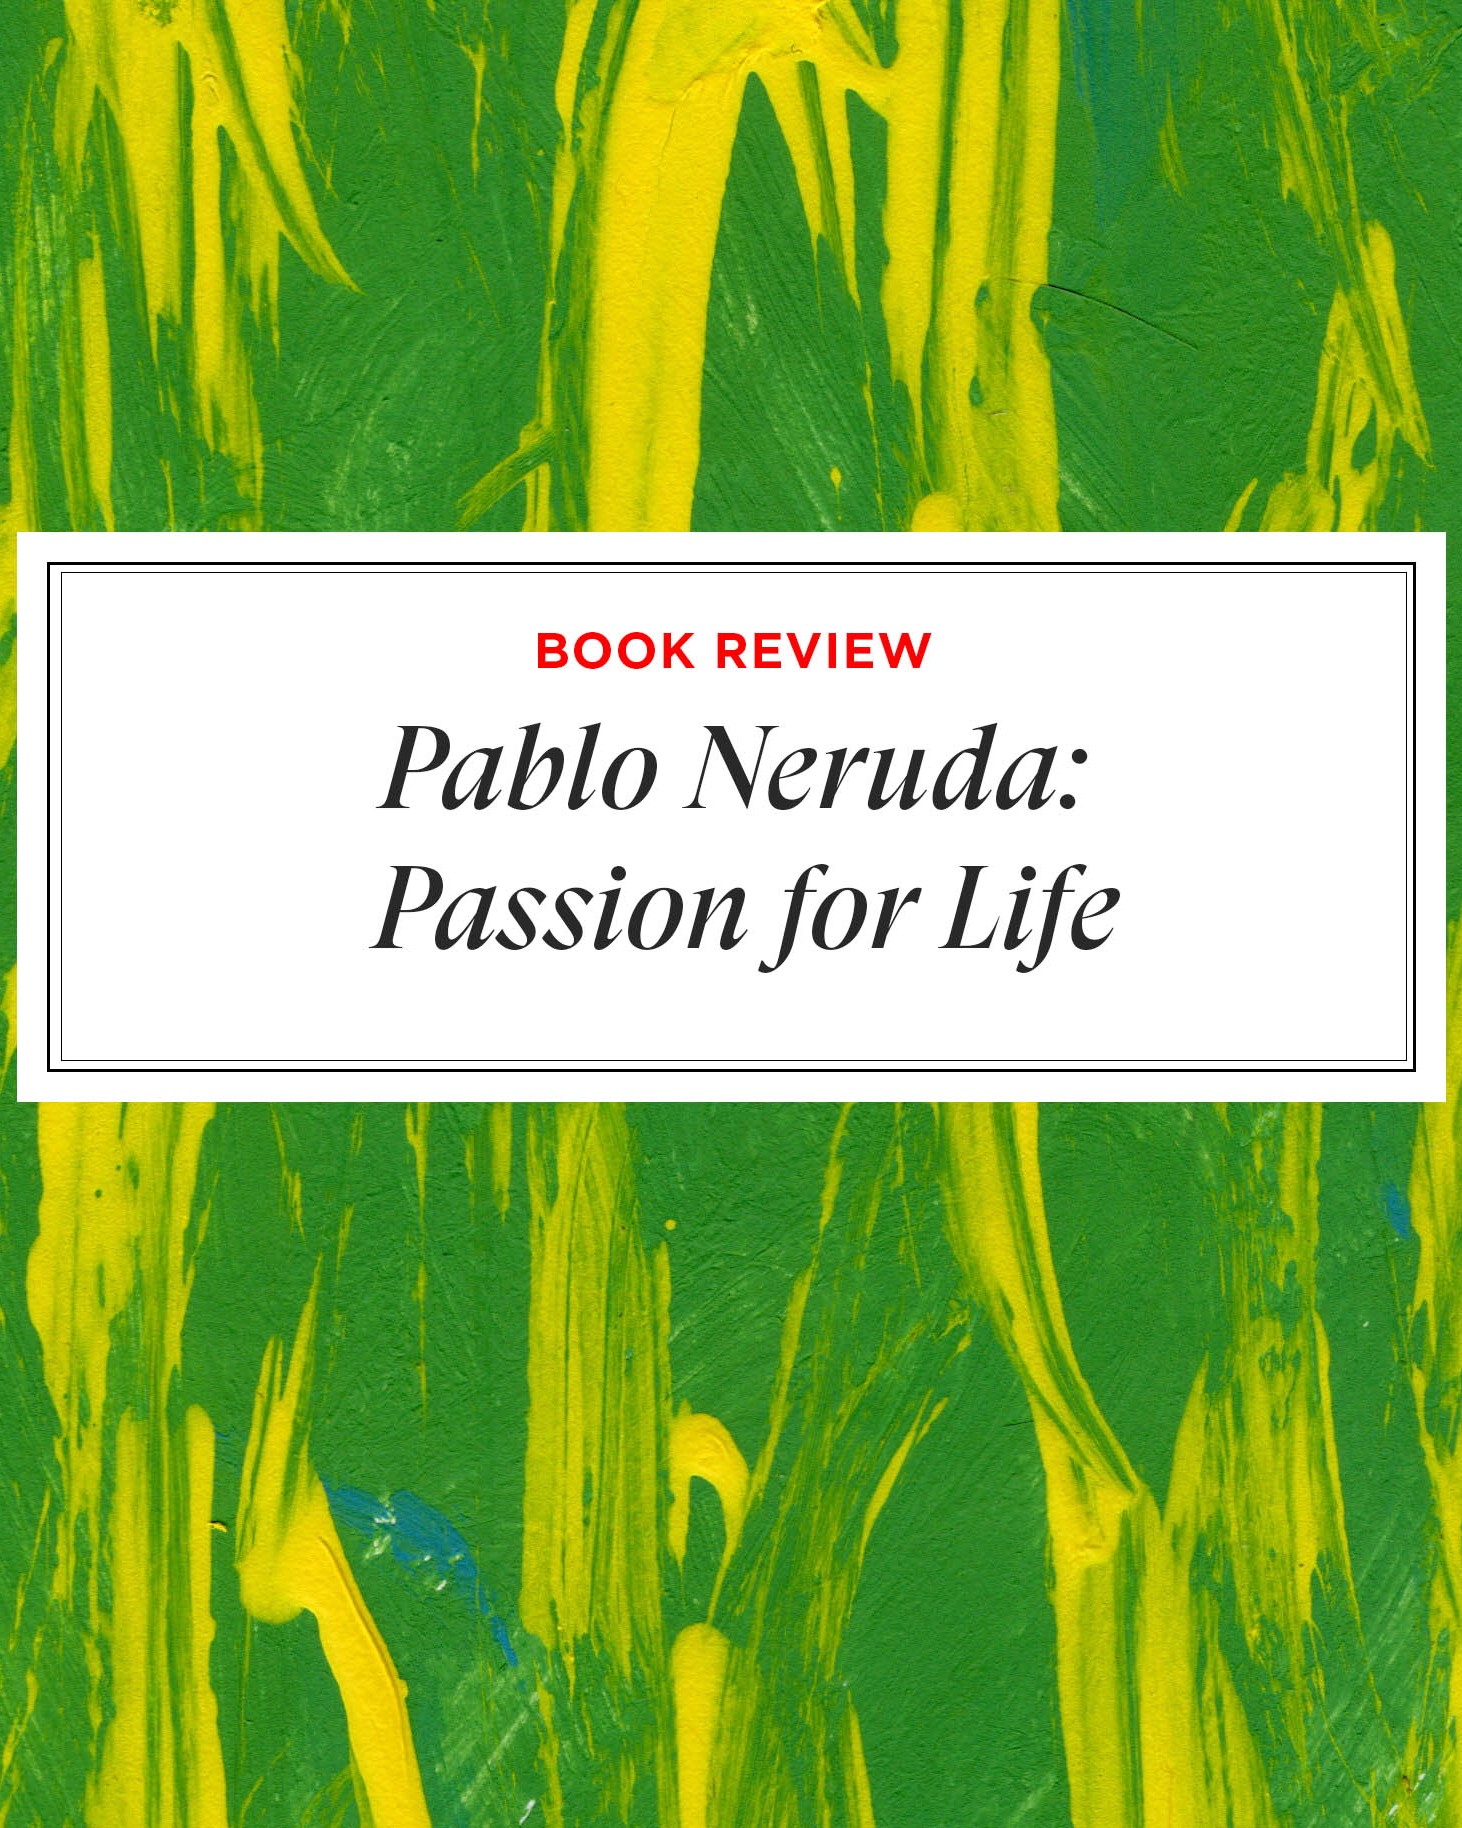 Hero image for Pablo Neruda article